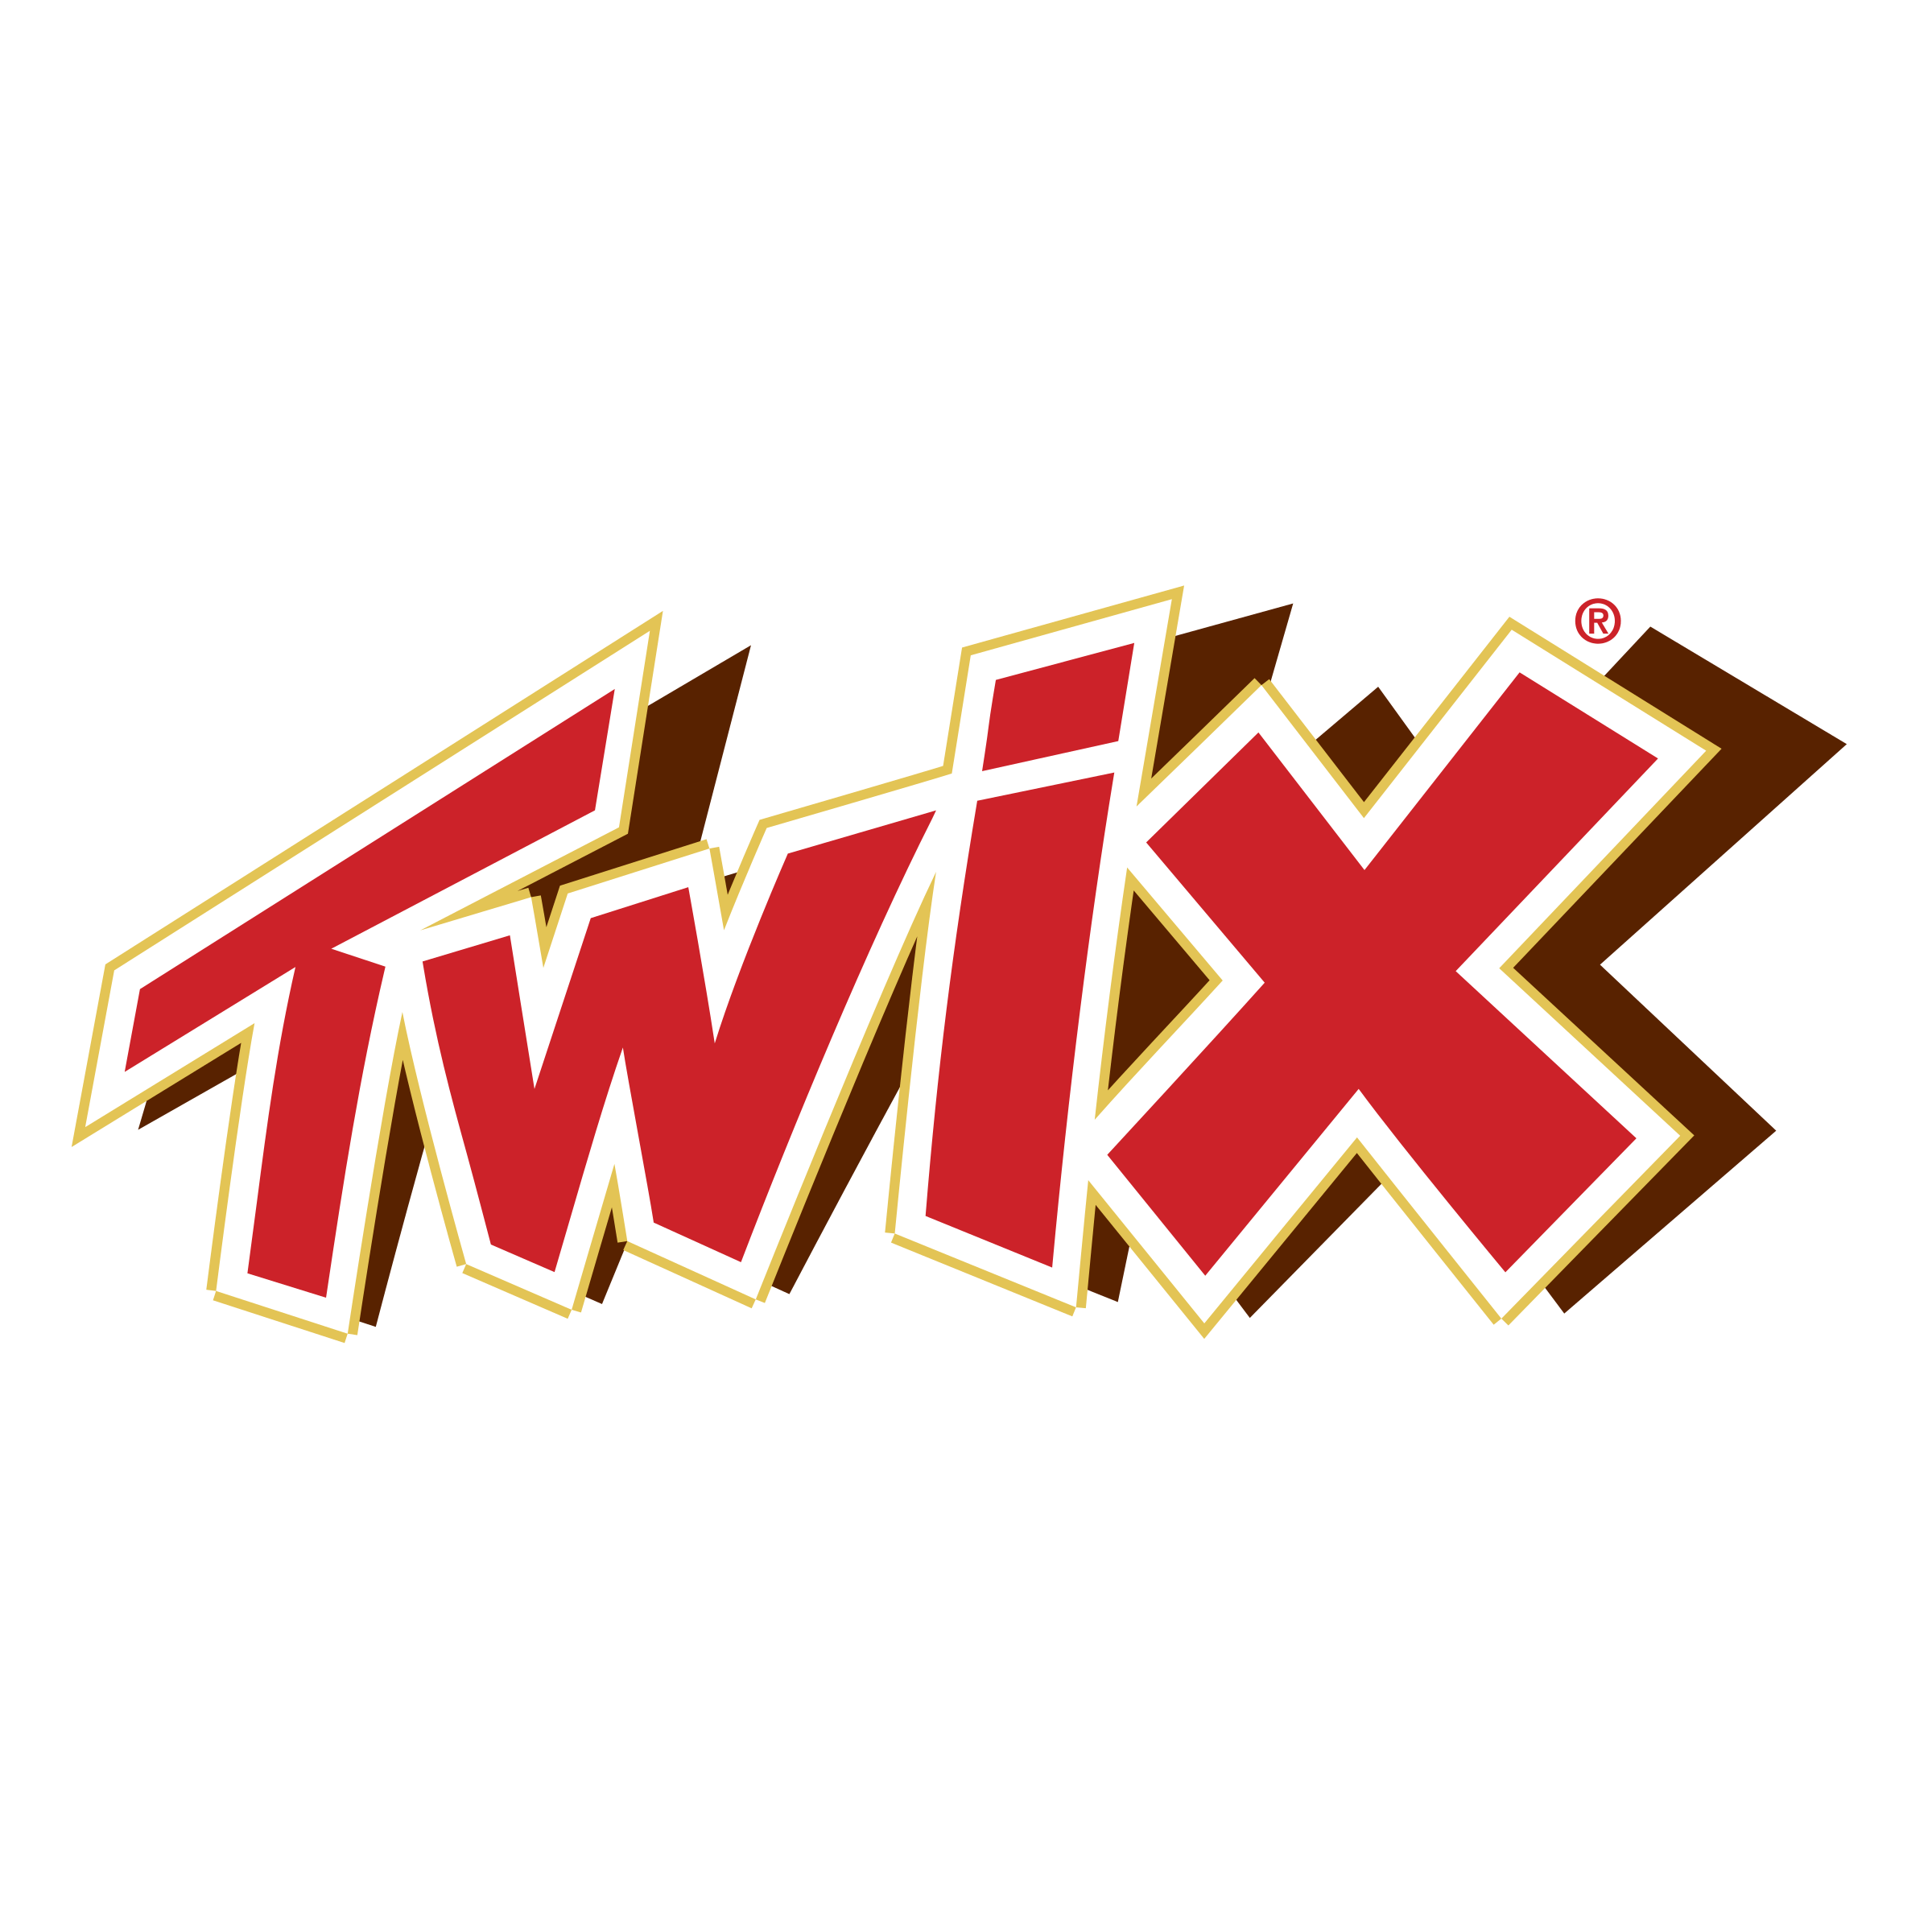 Twix Logo - Twix Logo PNG Transparent & SVG Vector - Freebie Supply